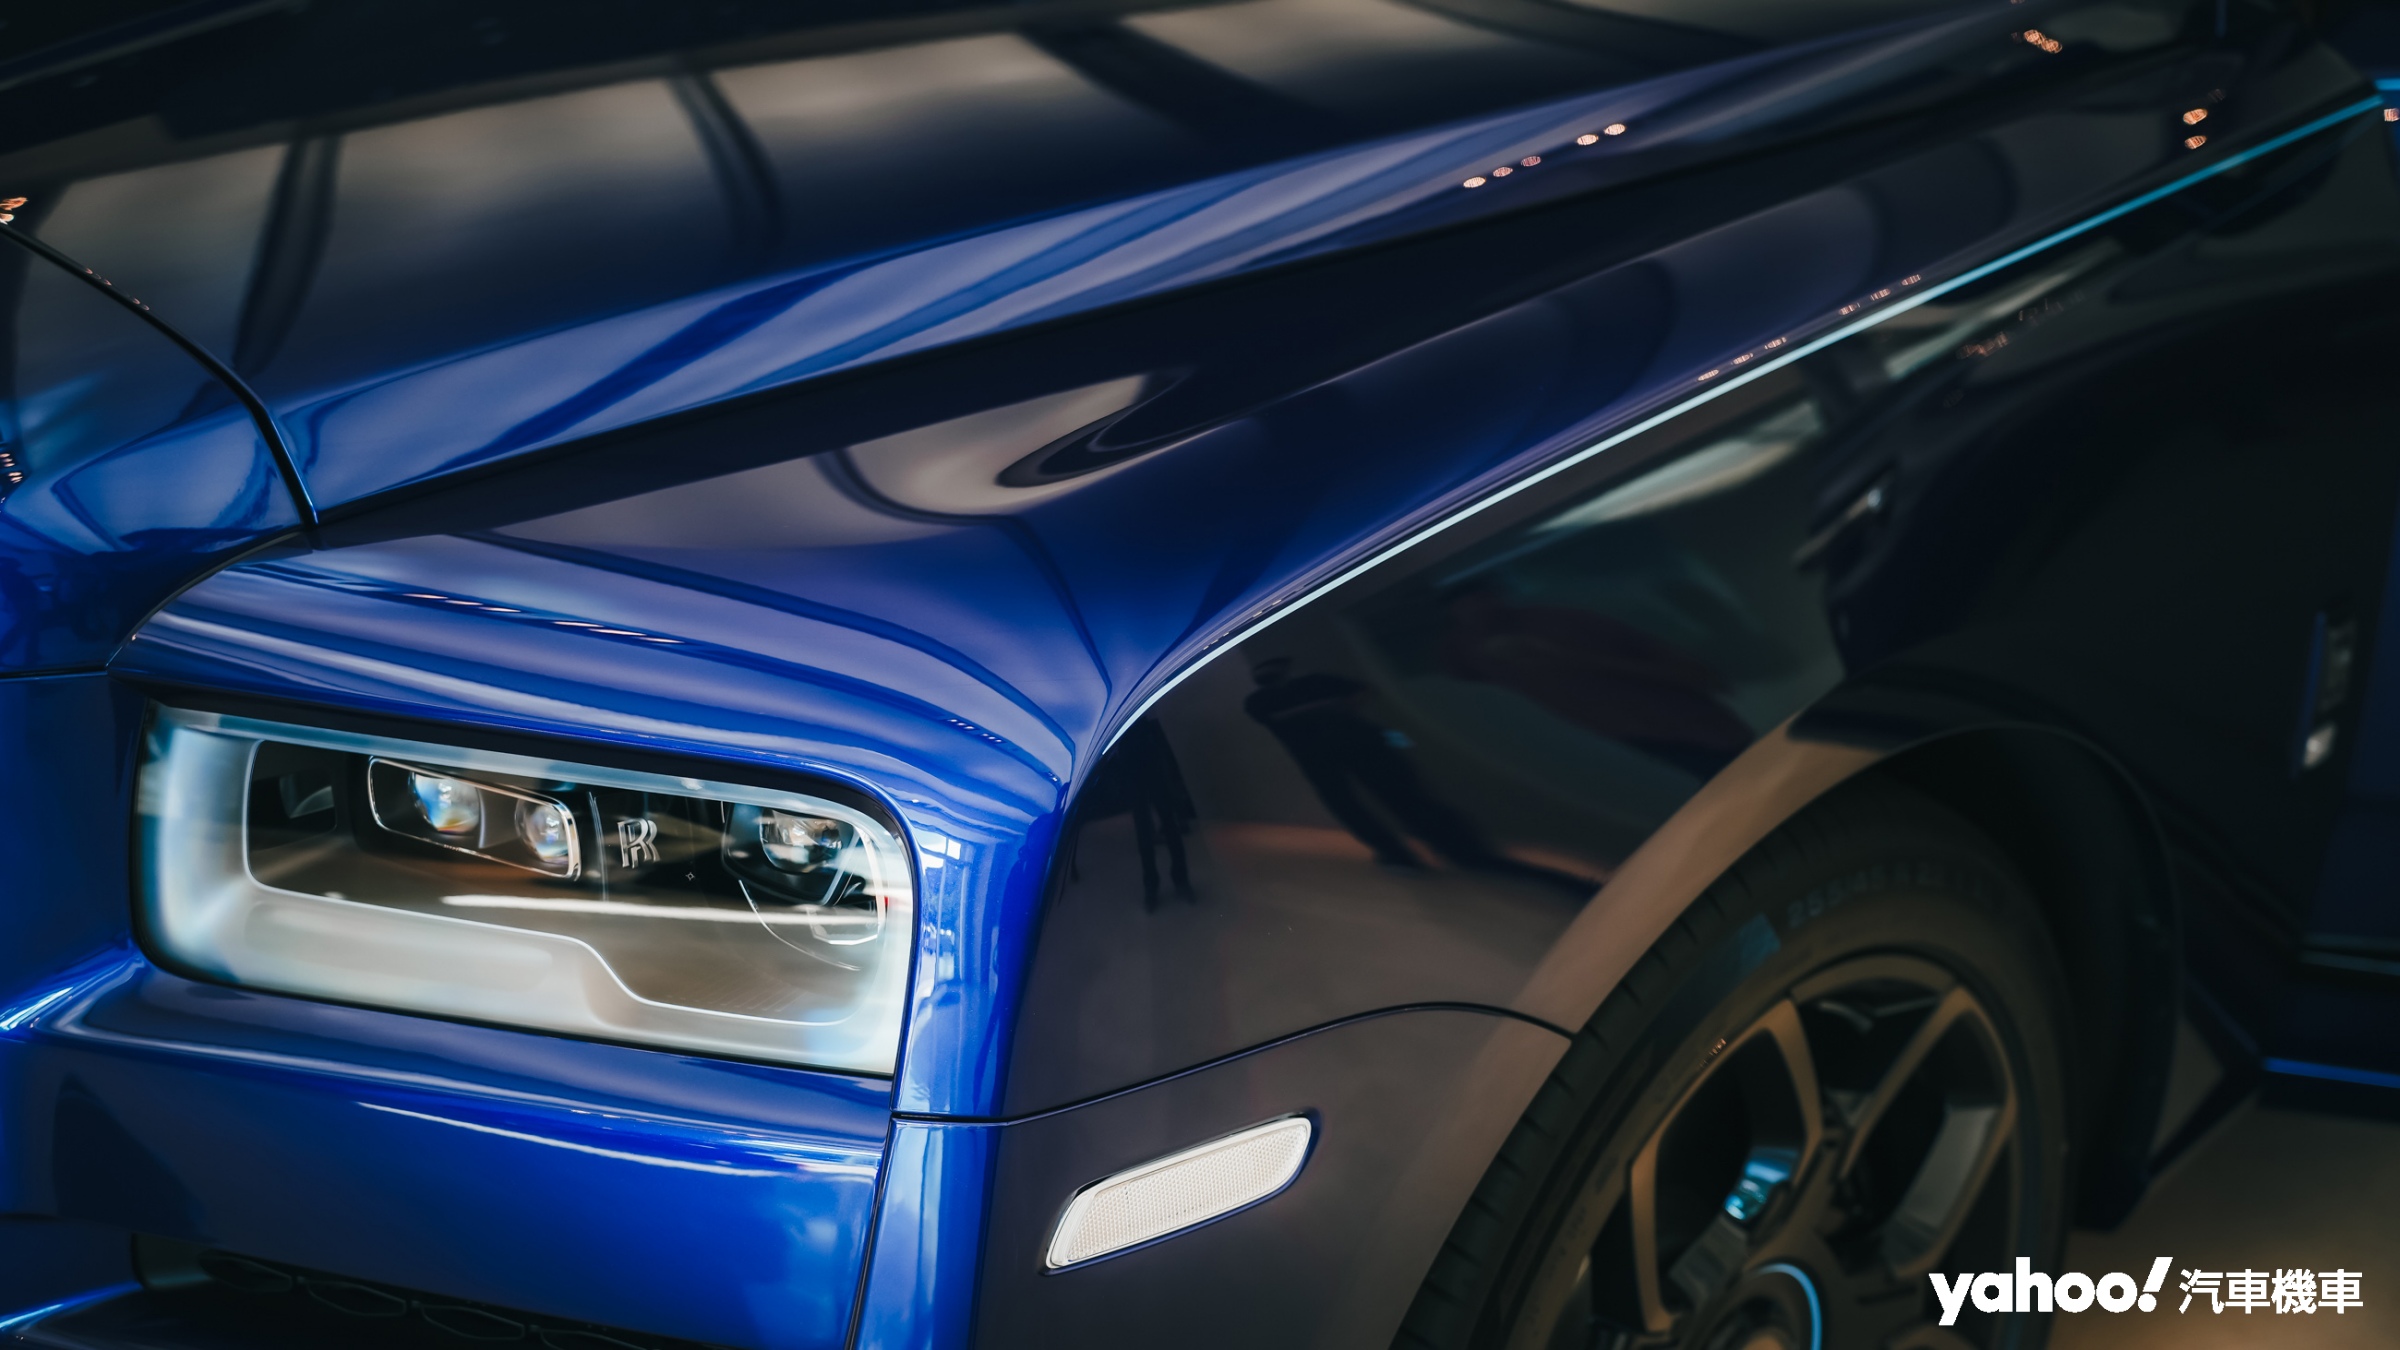 Stardust Blue星塵藍的訂製車色呈現地球大氣層頂部的深藍色調。